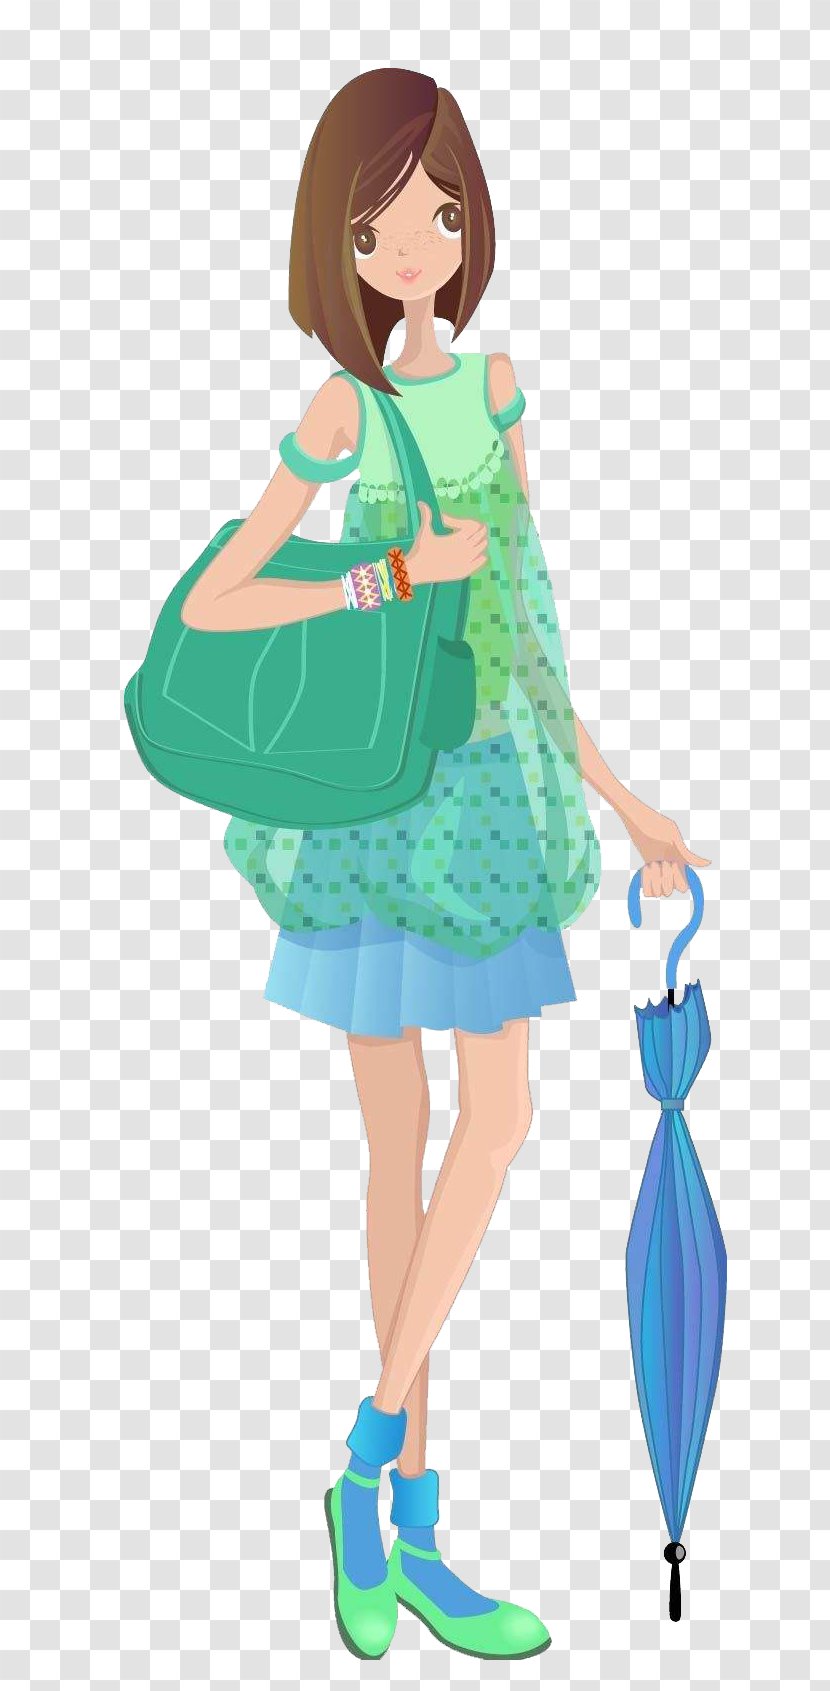 Download Backpack Illustration - Cartoon - Wearing A Green Skirt Man Transparent PNG